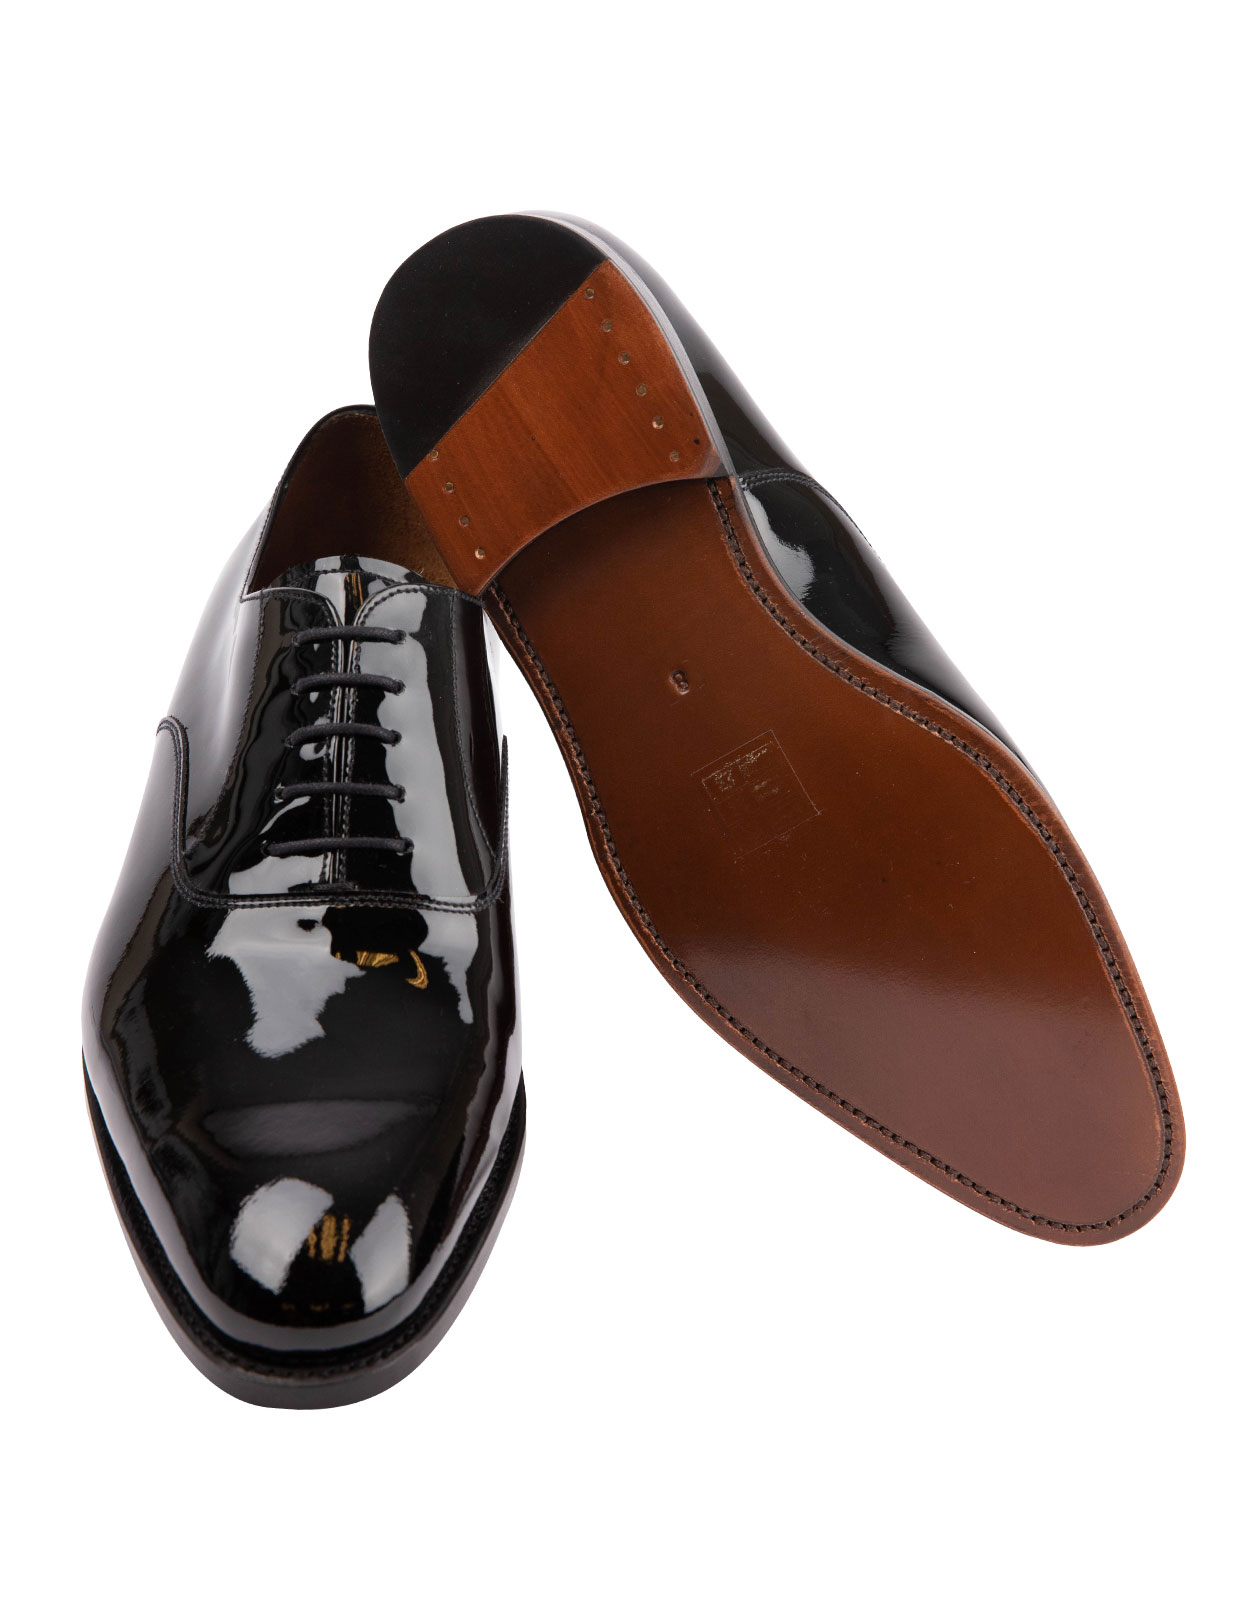 Patent Leather Oxford Shoe Black Stl 10